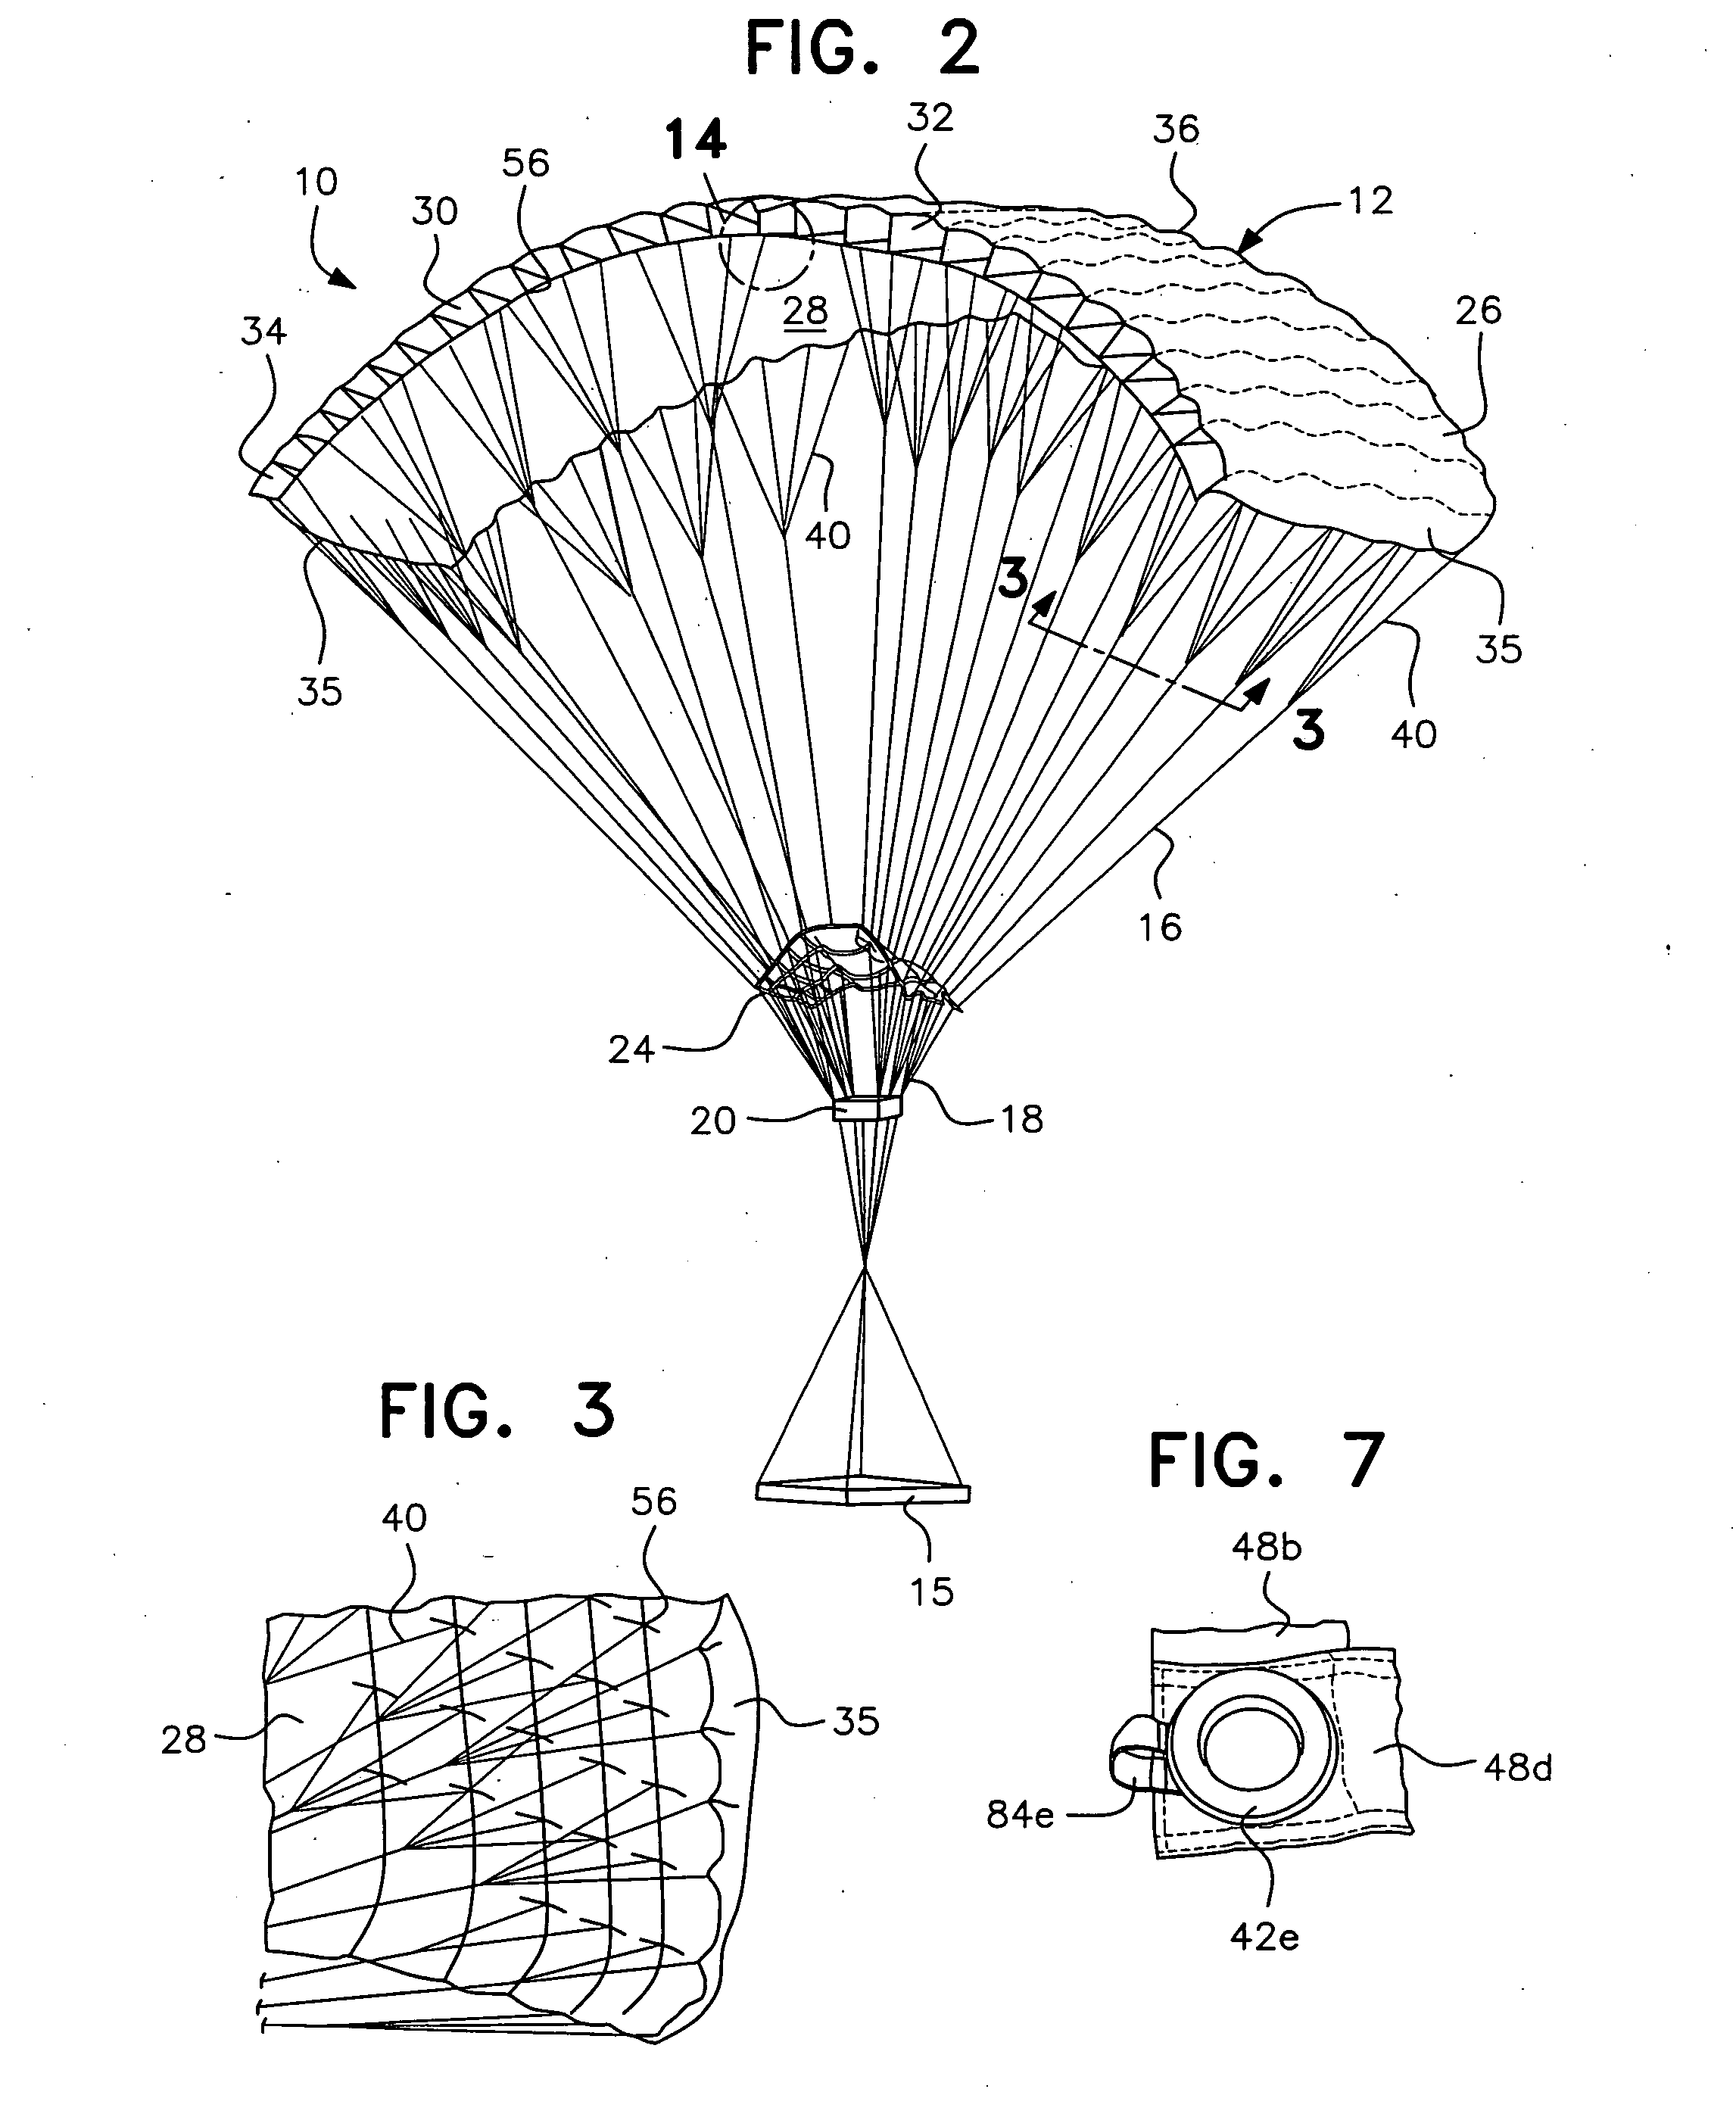 Multi-grommet retained slider for parachutes